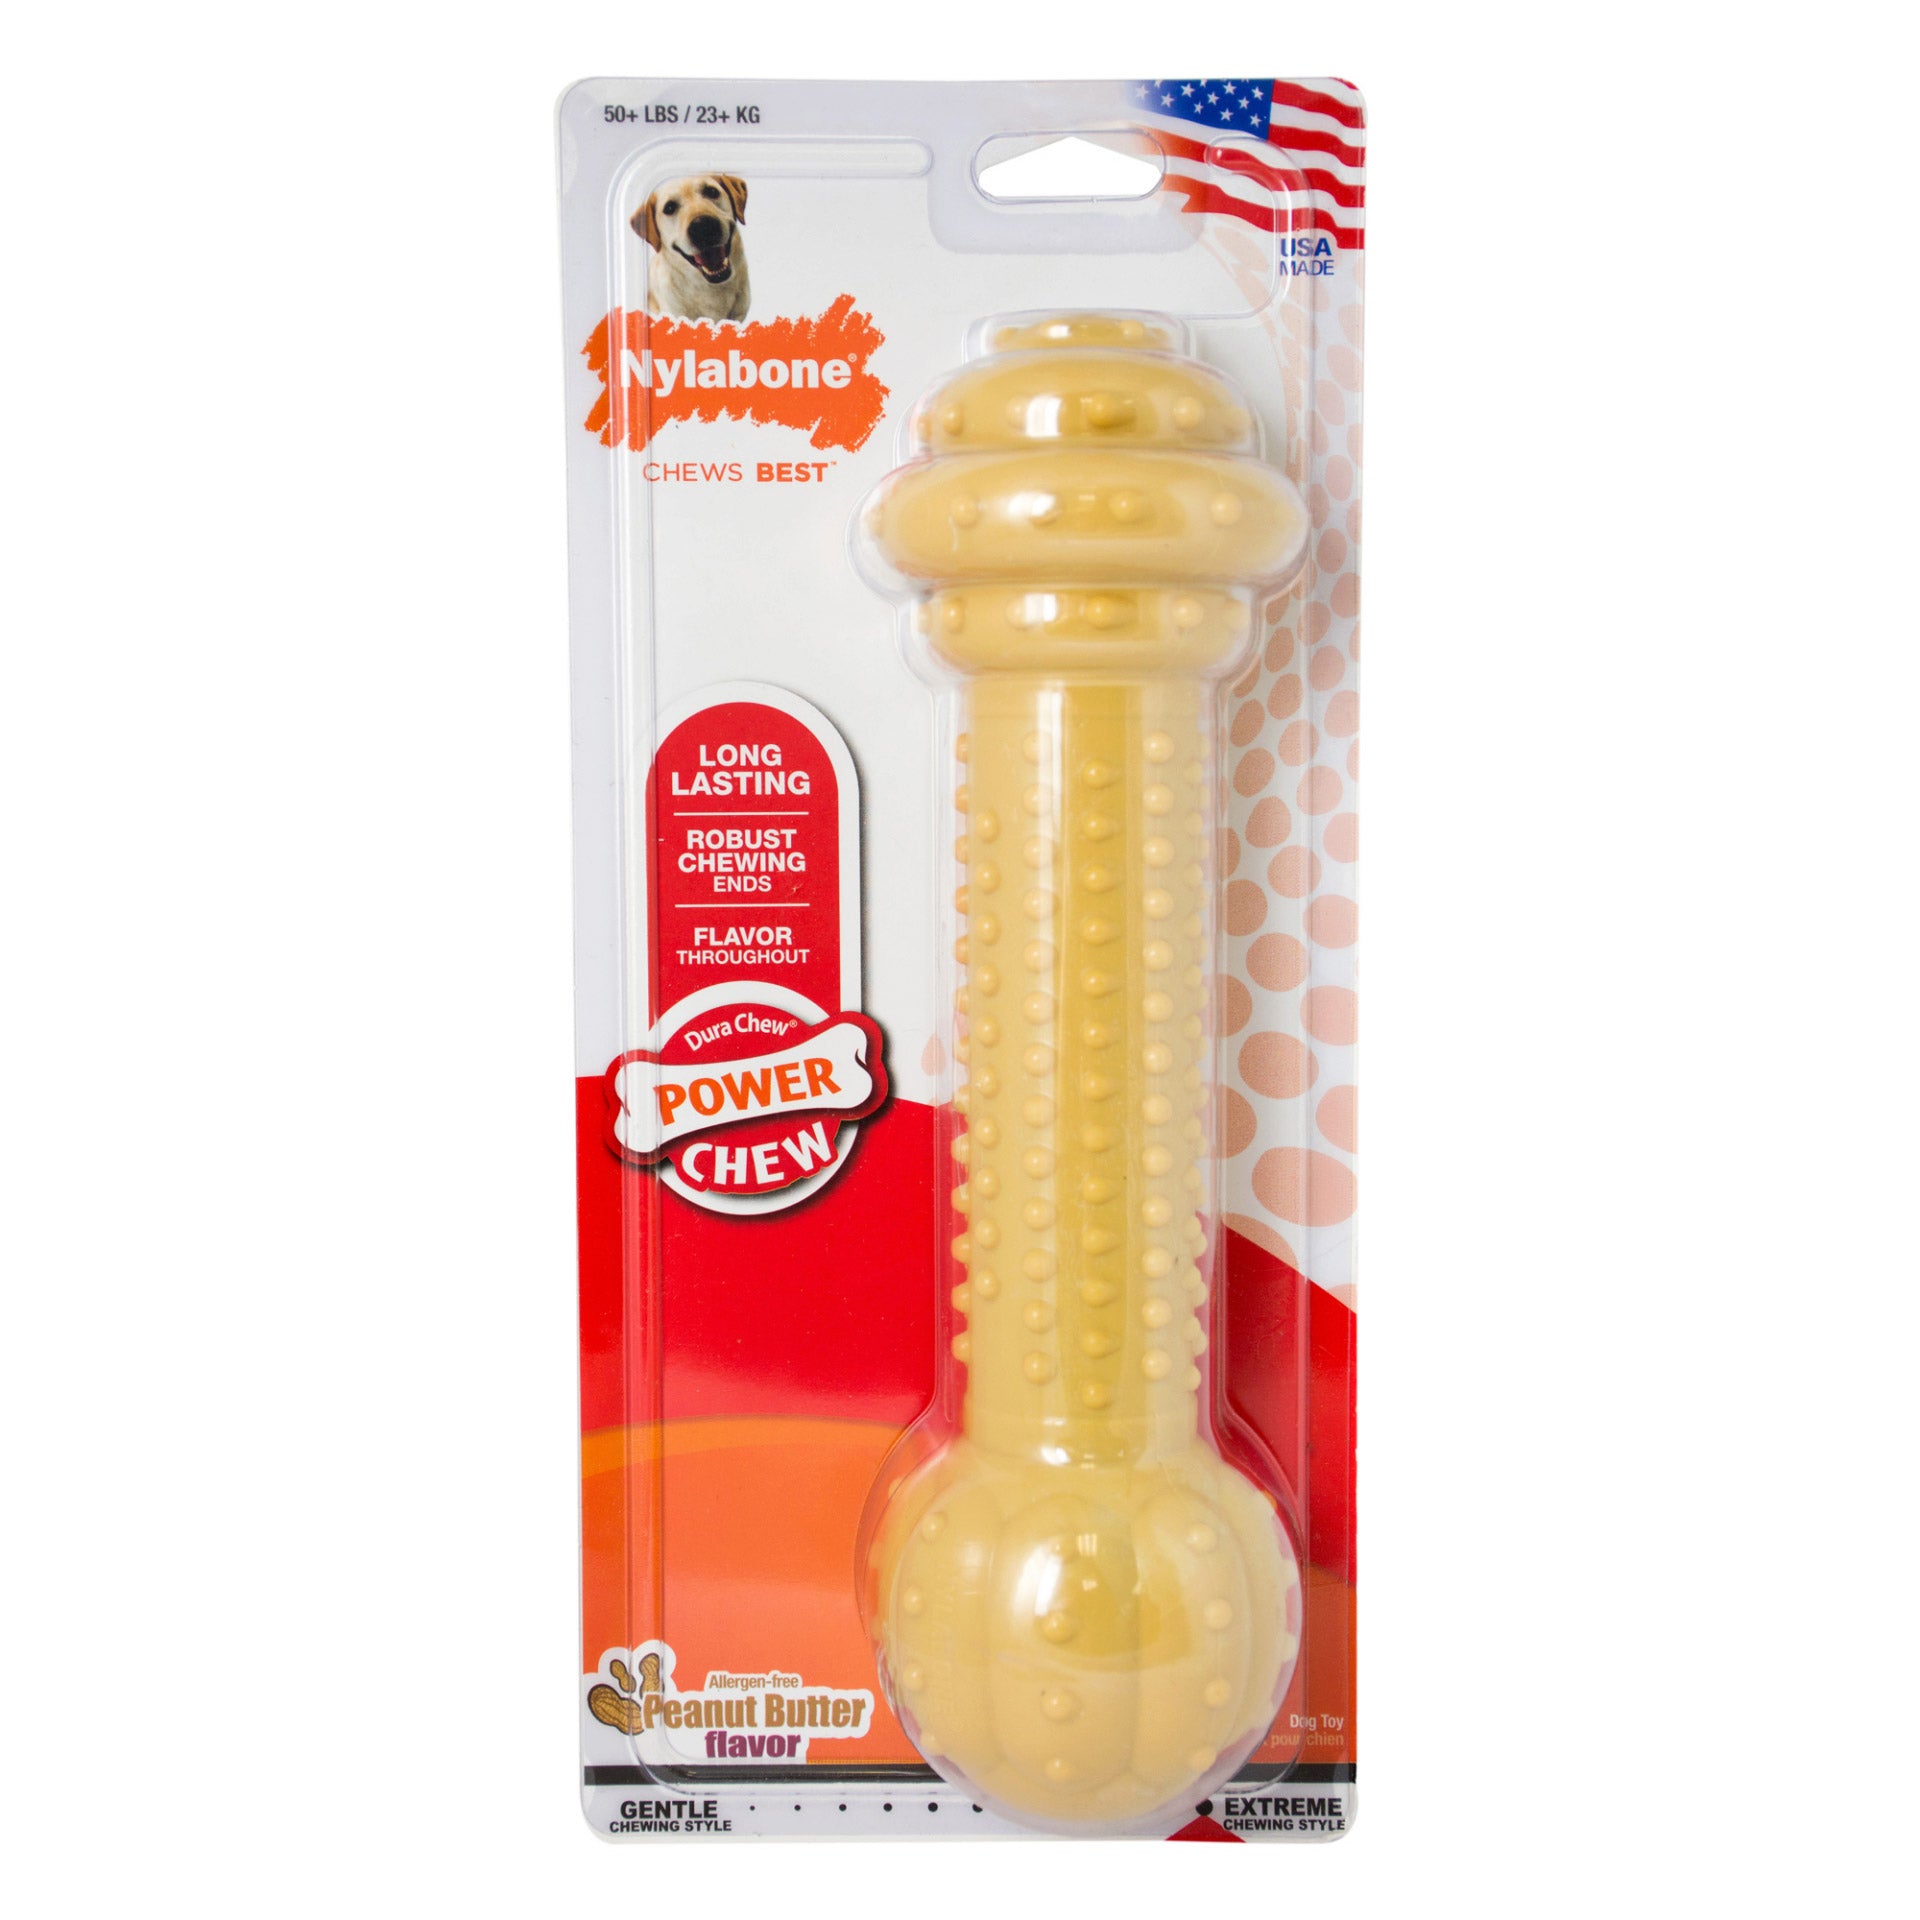 Nylabone Power Chew Barbell Peanut Butter Dog Toy